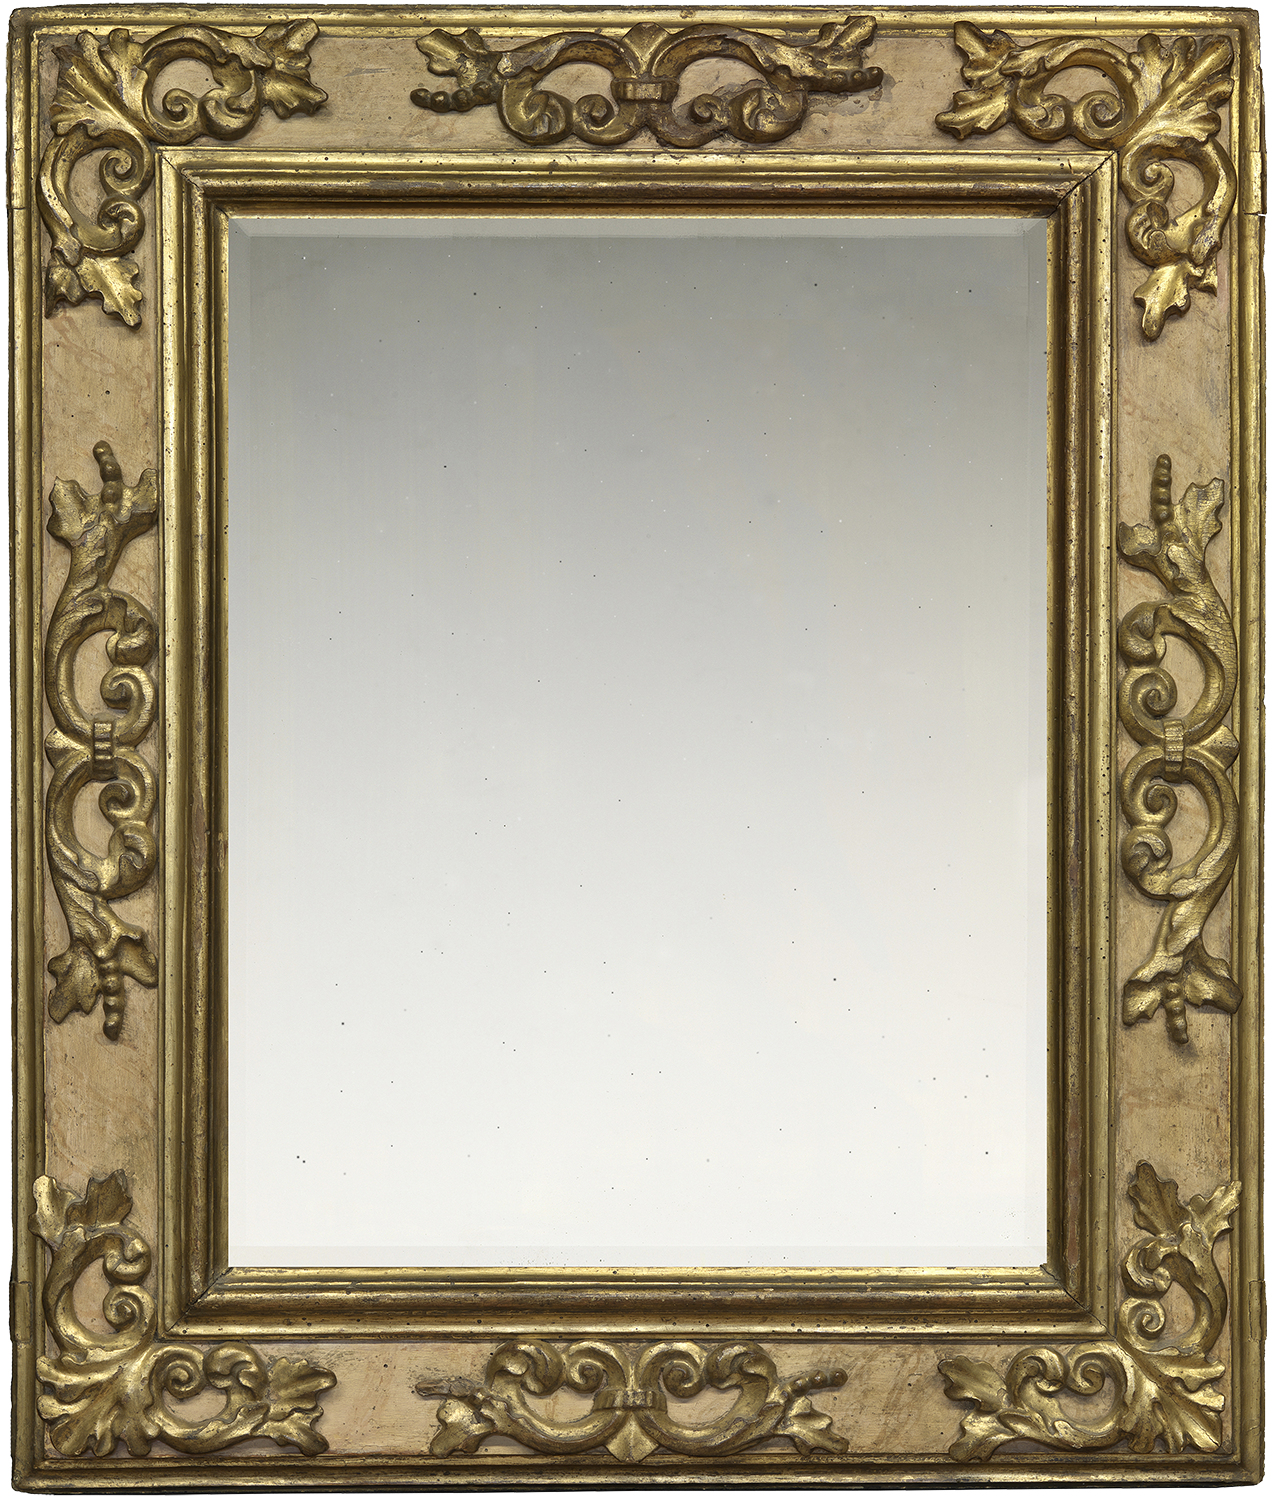 17th century Italian (Tuscan) Baroque cassetta frame